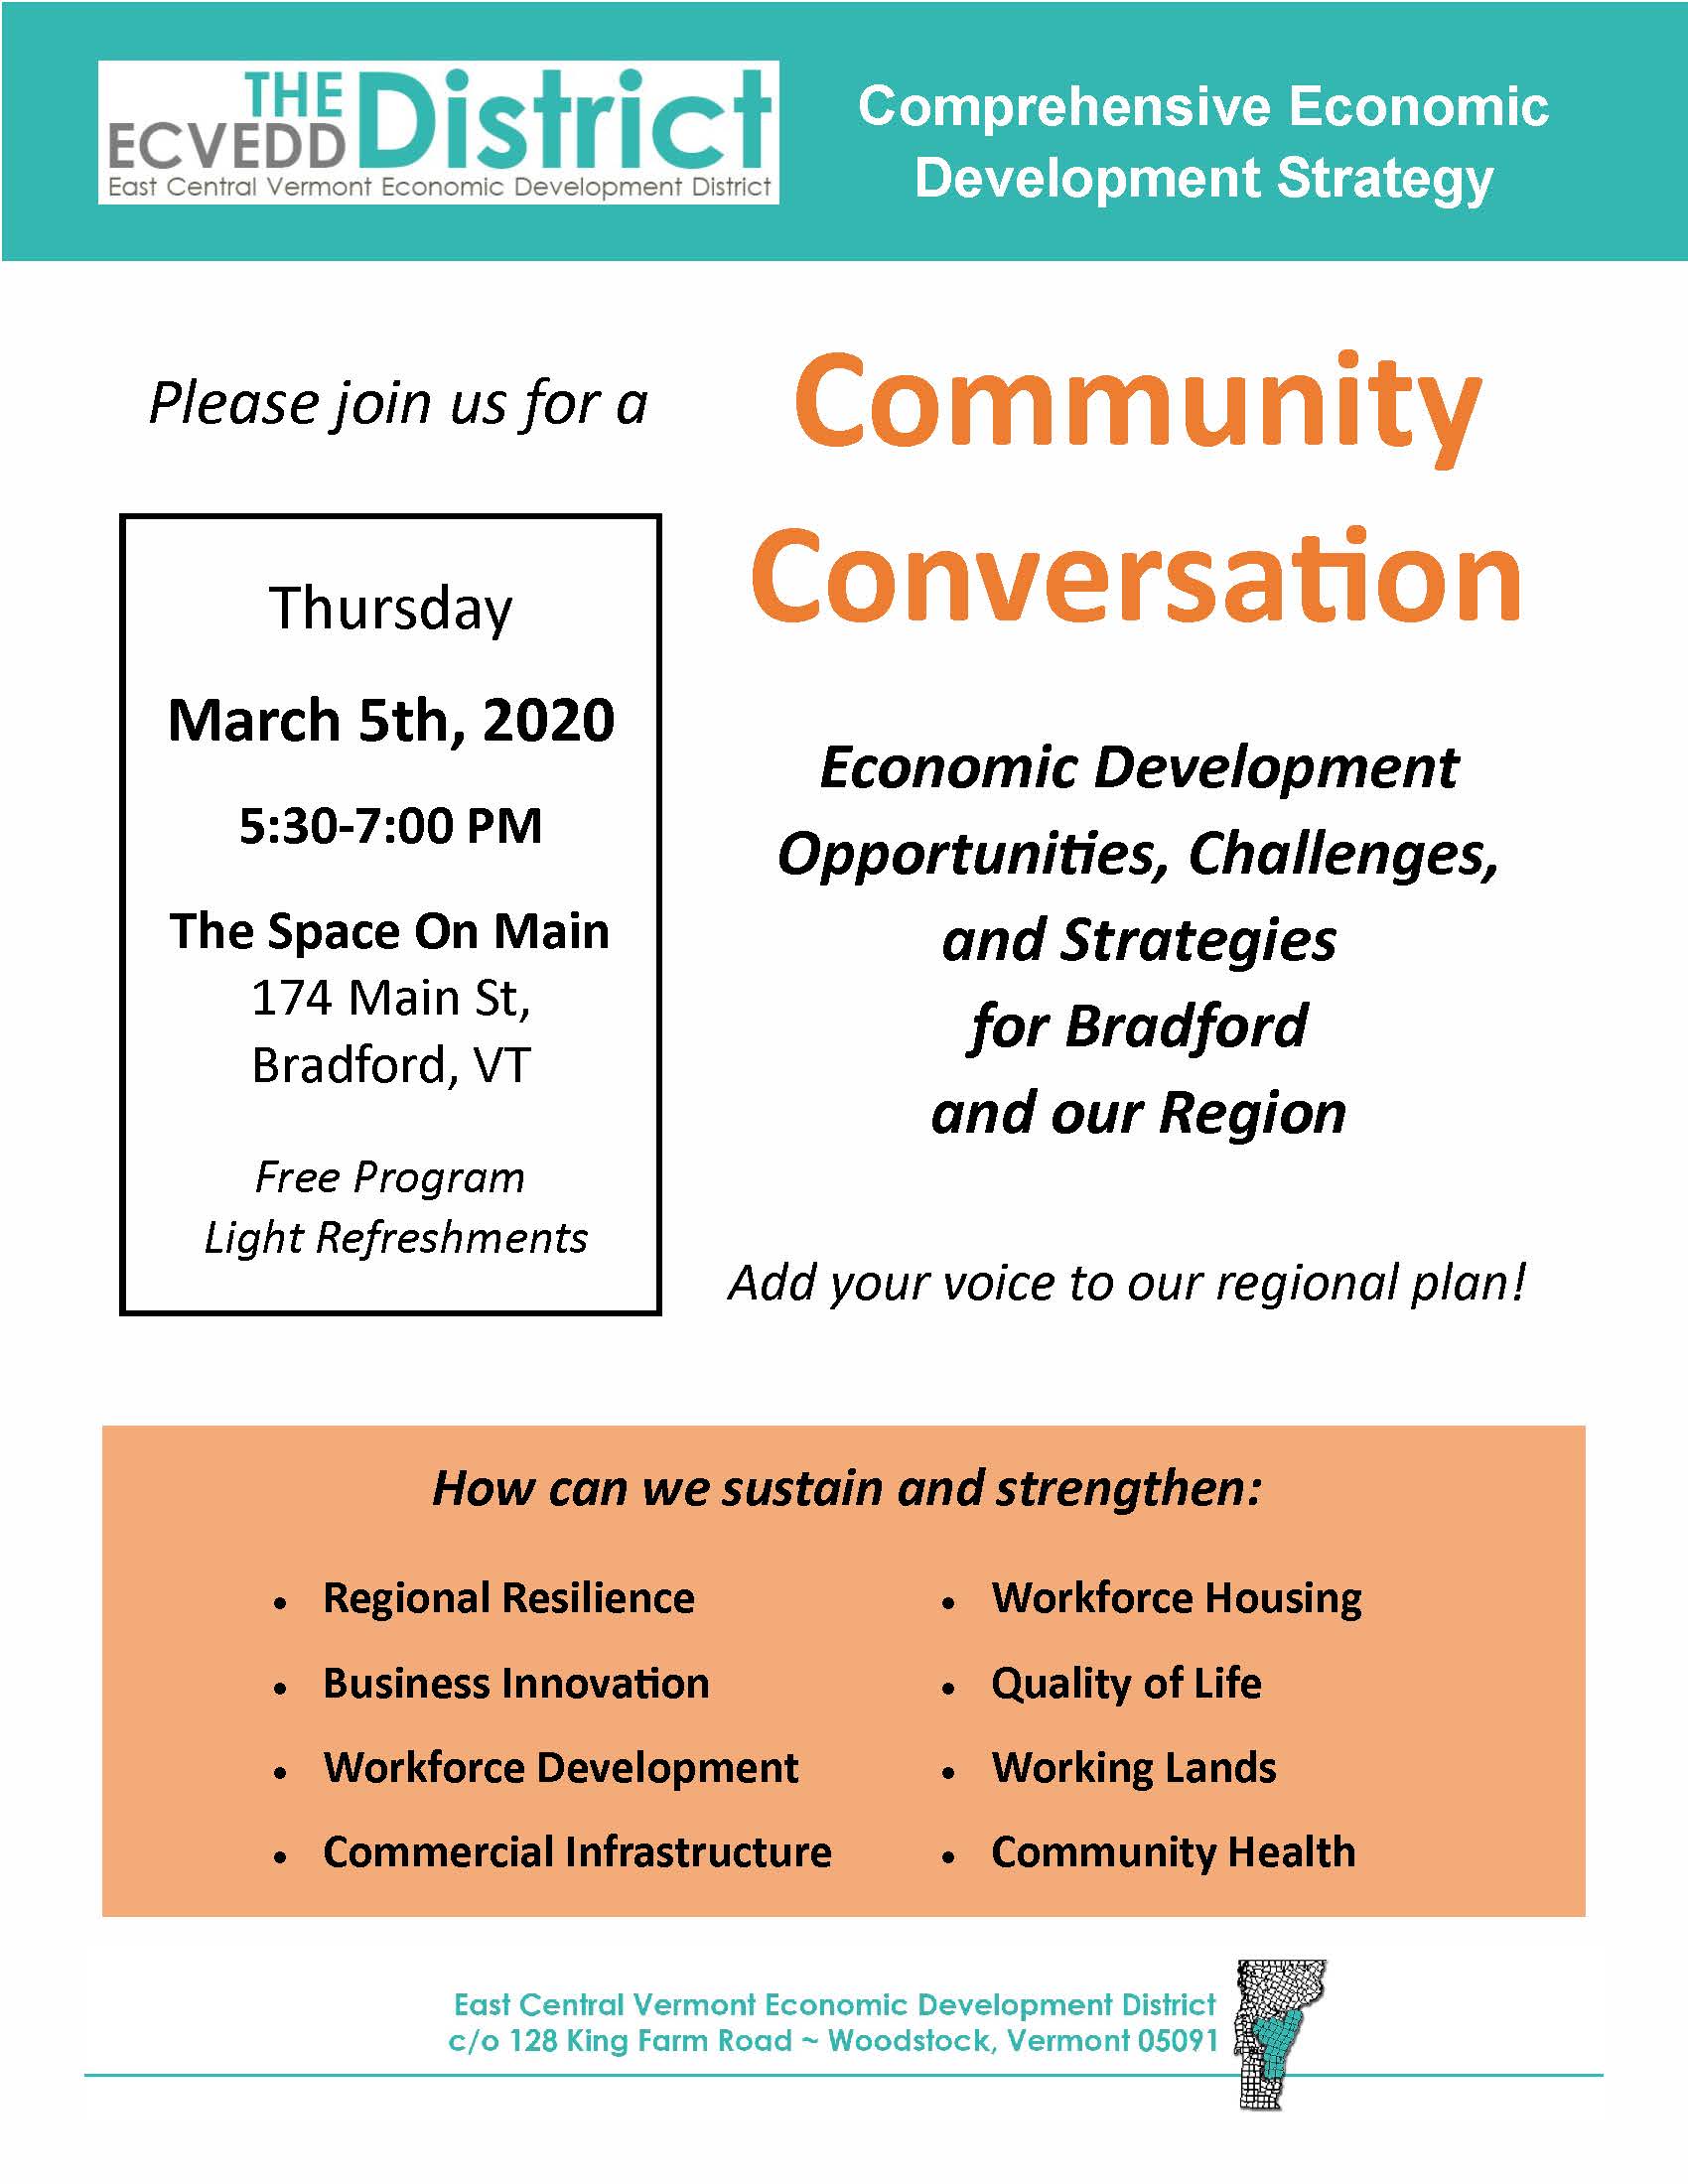 Community Conversation Flyer